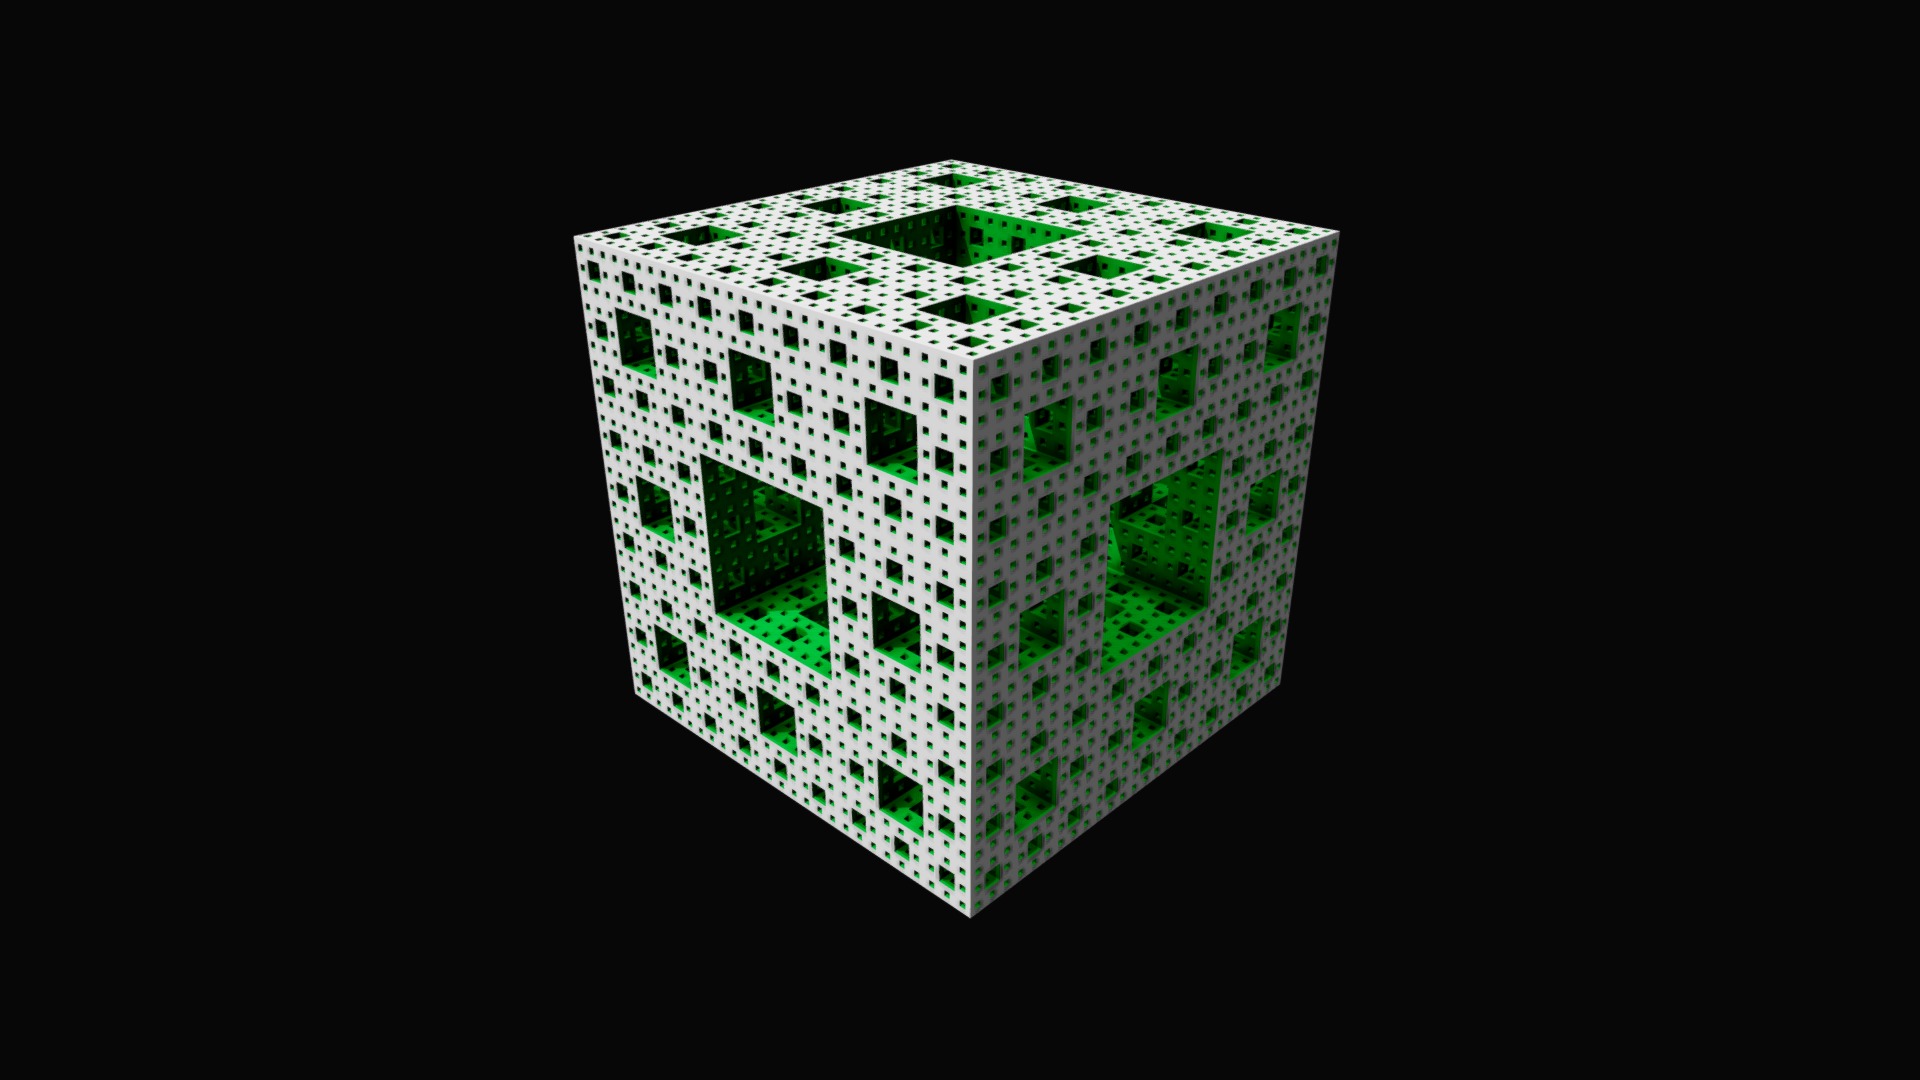 3D model Menger Sponge - This is a 3D model of the Menger Sponge. The 3D model is about a cube with a green design.